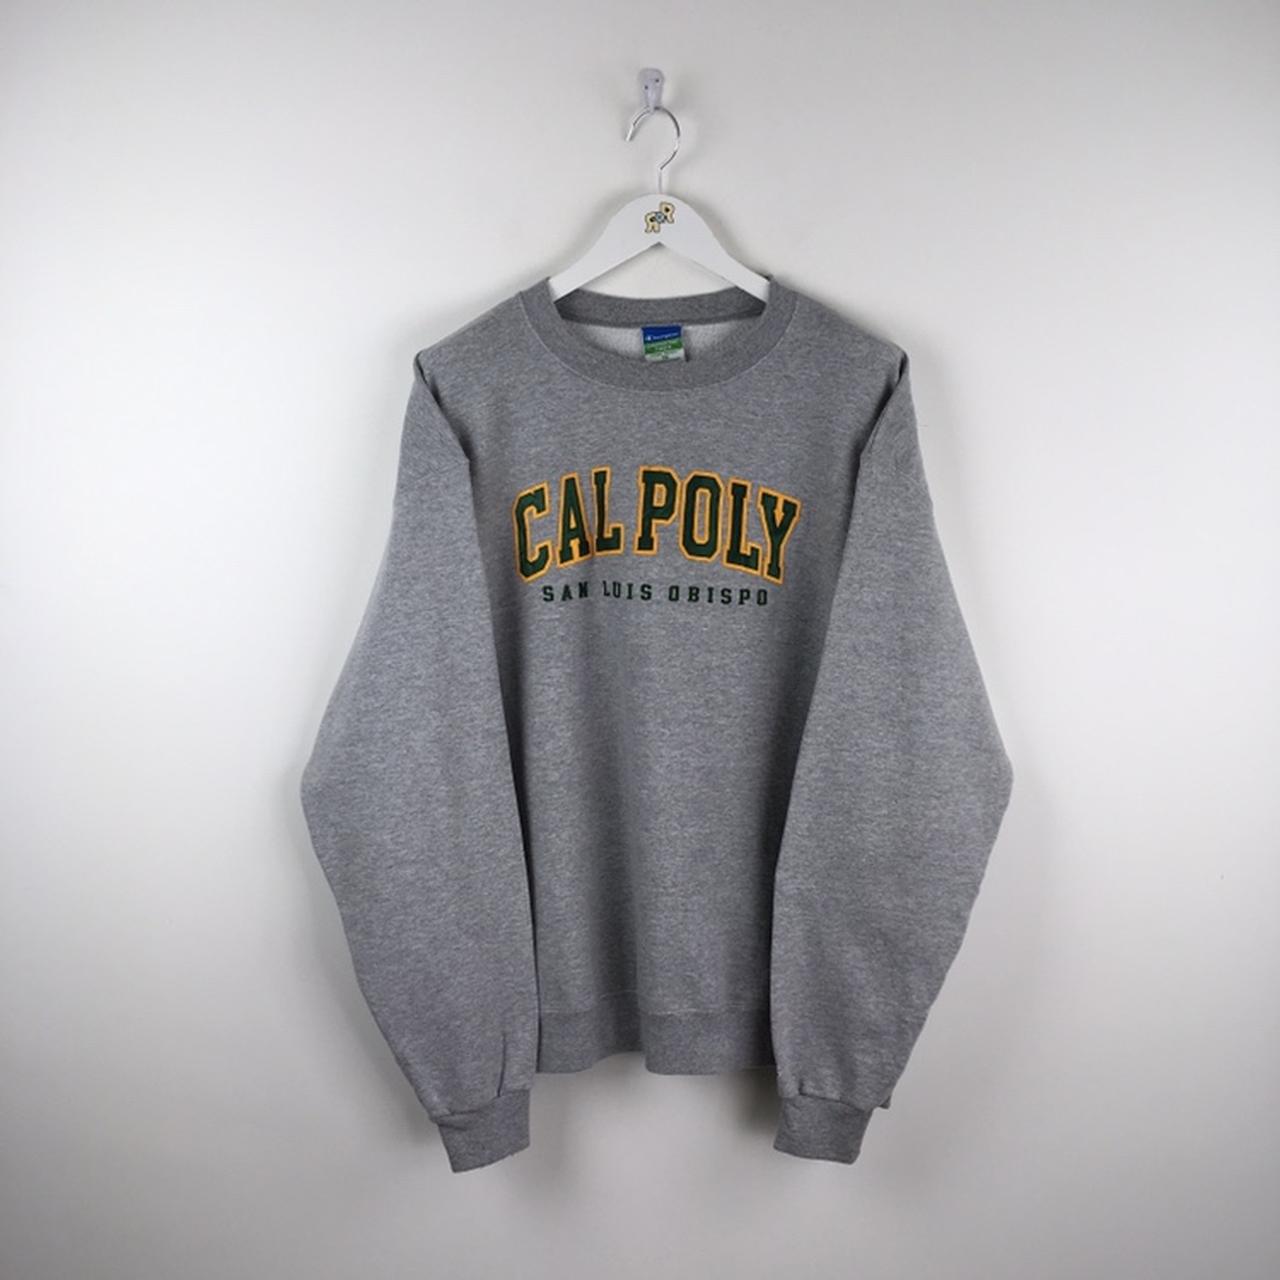 Product Image 2 - Vintage Champion Calpoly sweatshirt best